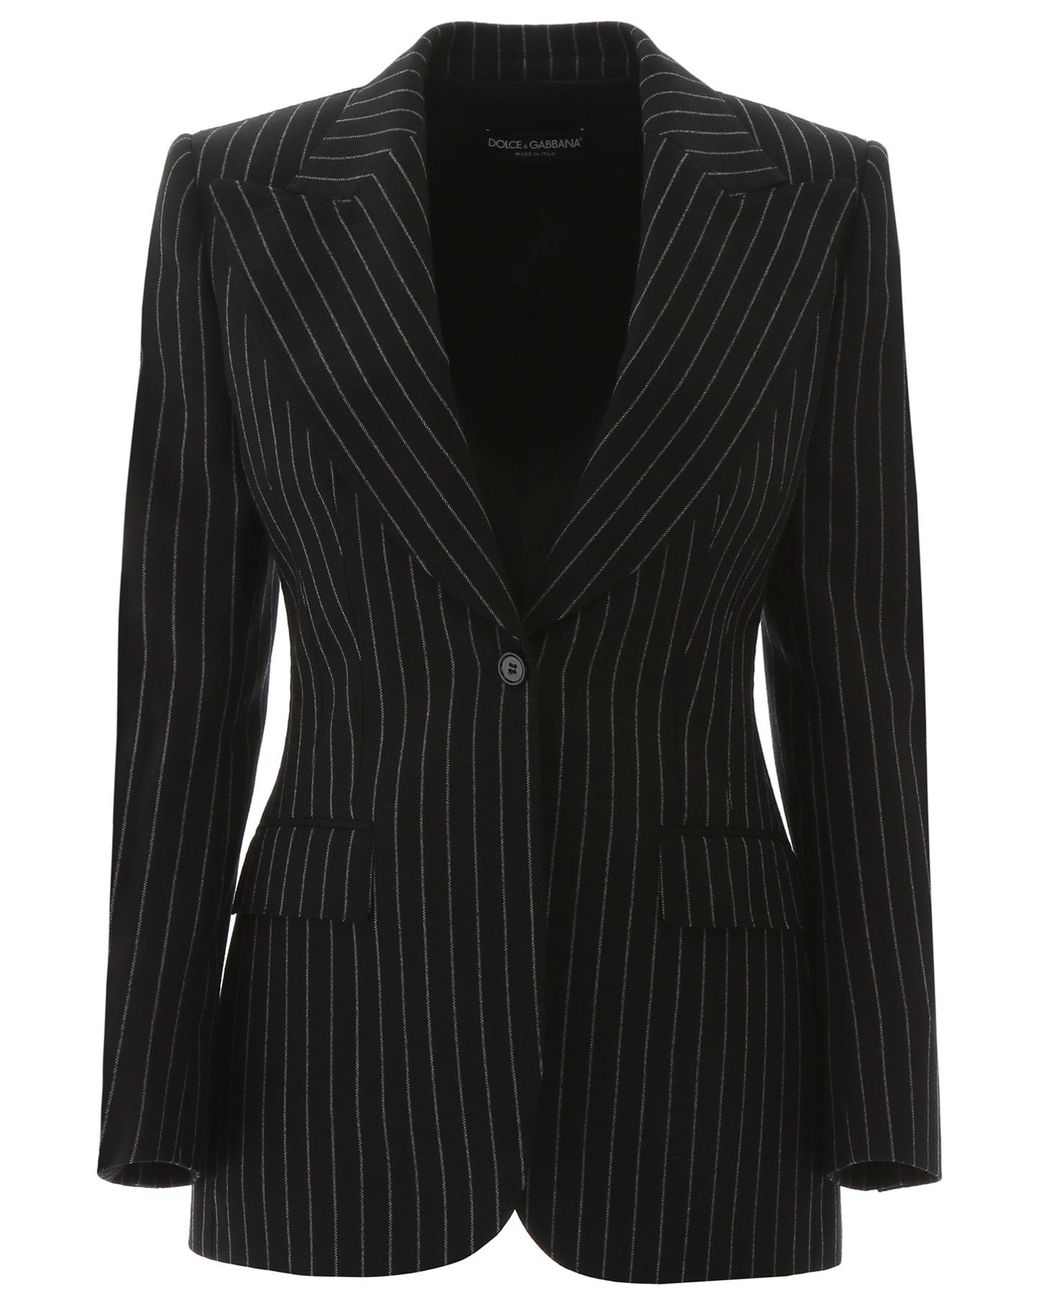 Dolce & Gabbana Wool Pinstriped Blazer in Black,Grey (Black) - Save 34% ...